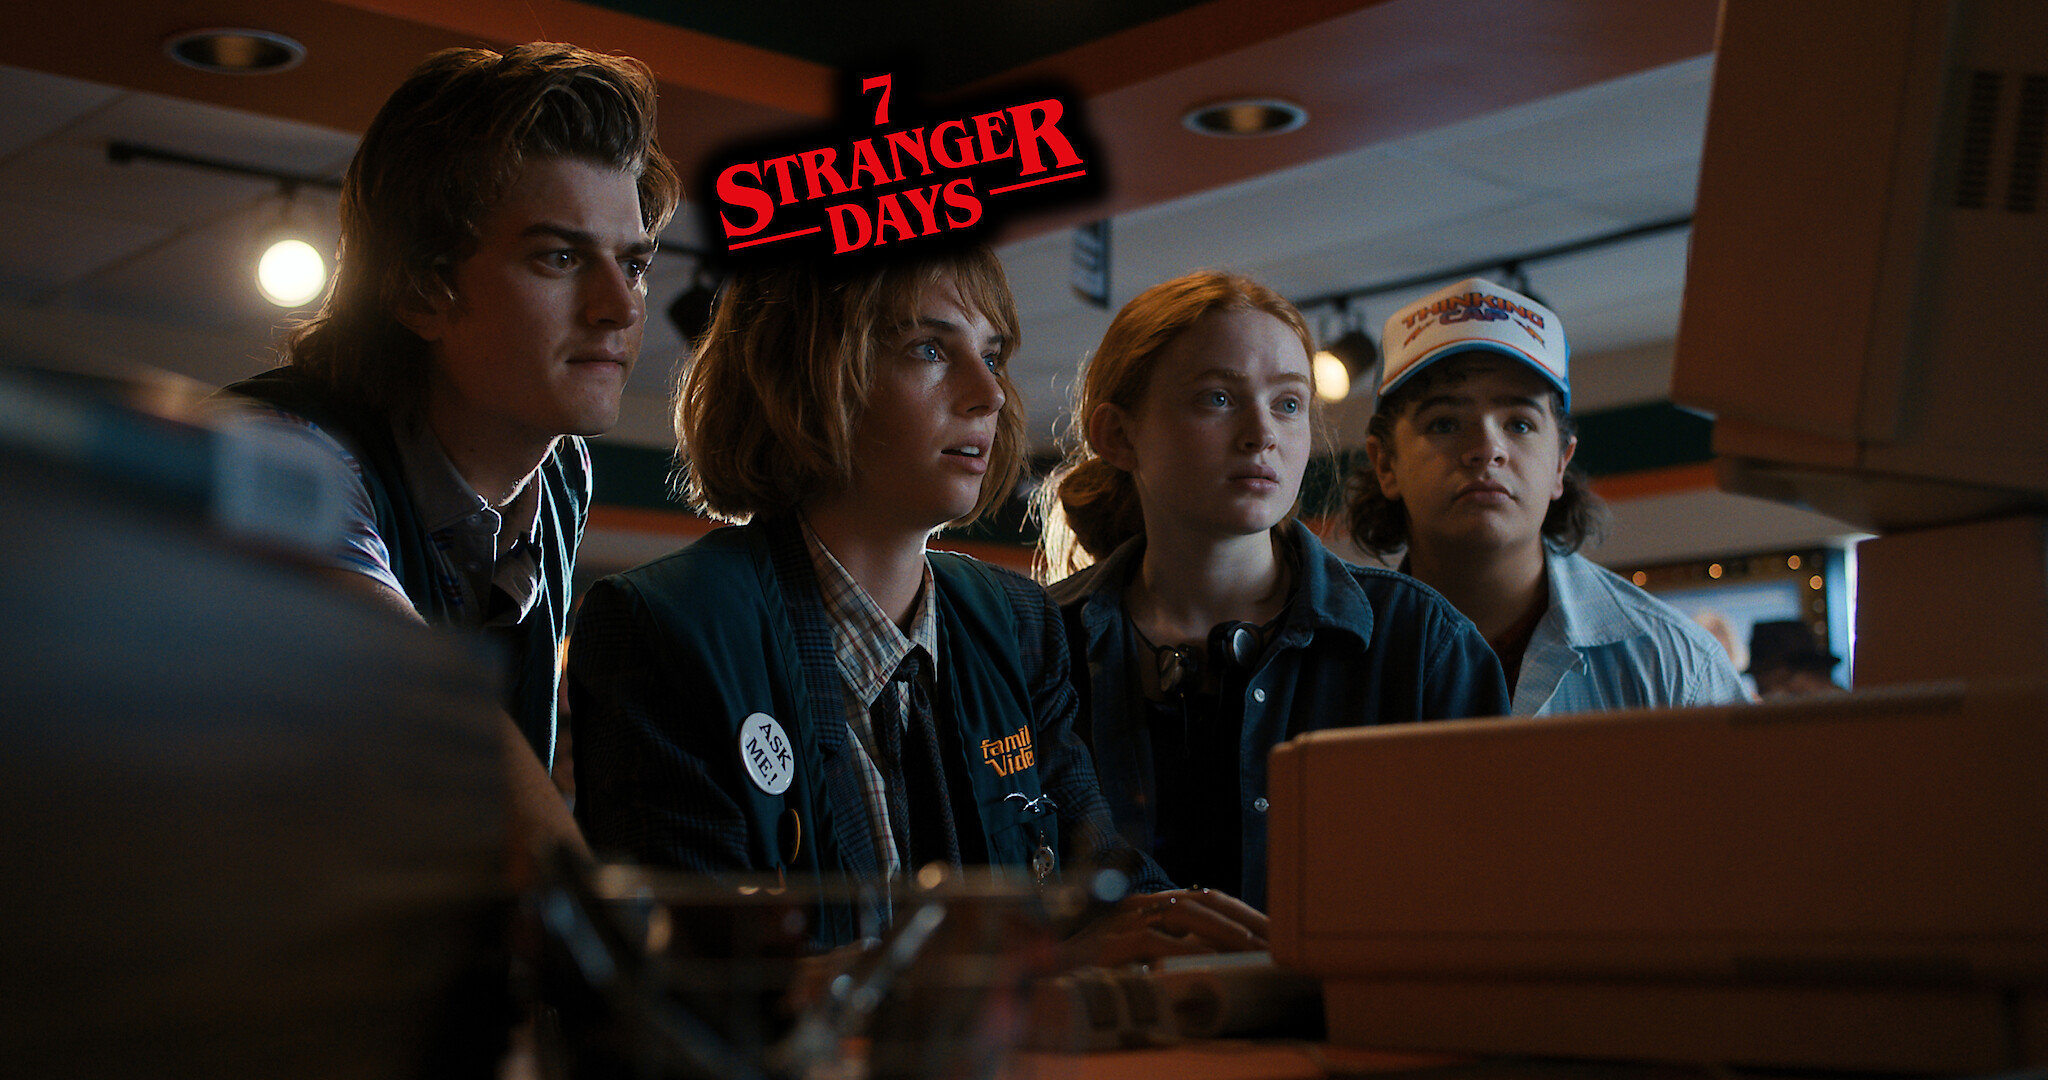 Stranger Things' Season 2: Watch the Full Trailer - The New York Times